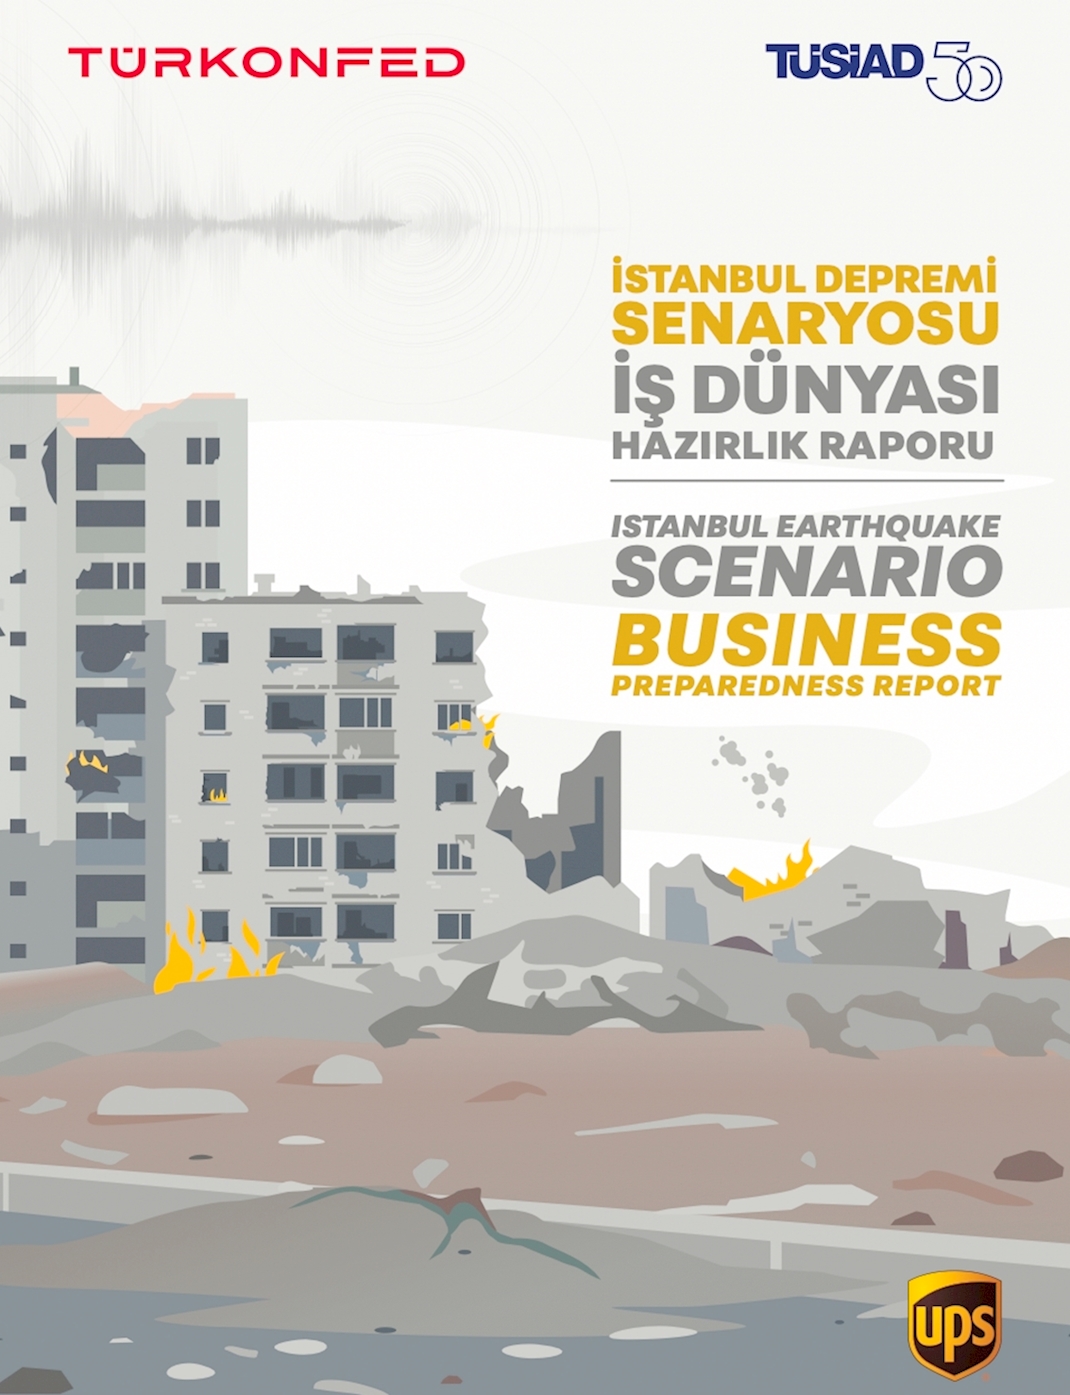 Istanbul Earthquake Scenarıo Busıness Preparedness Report